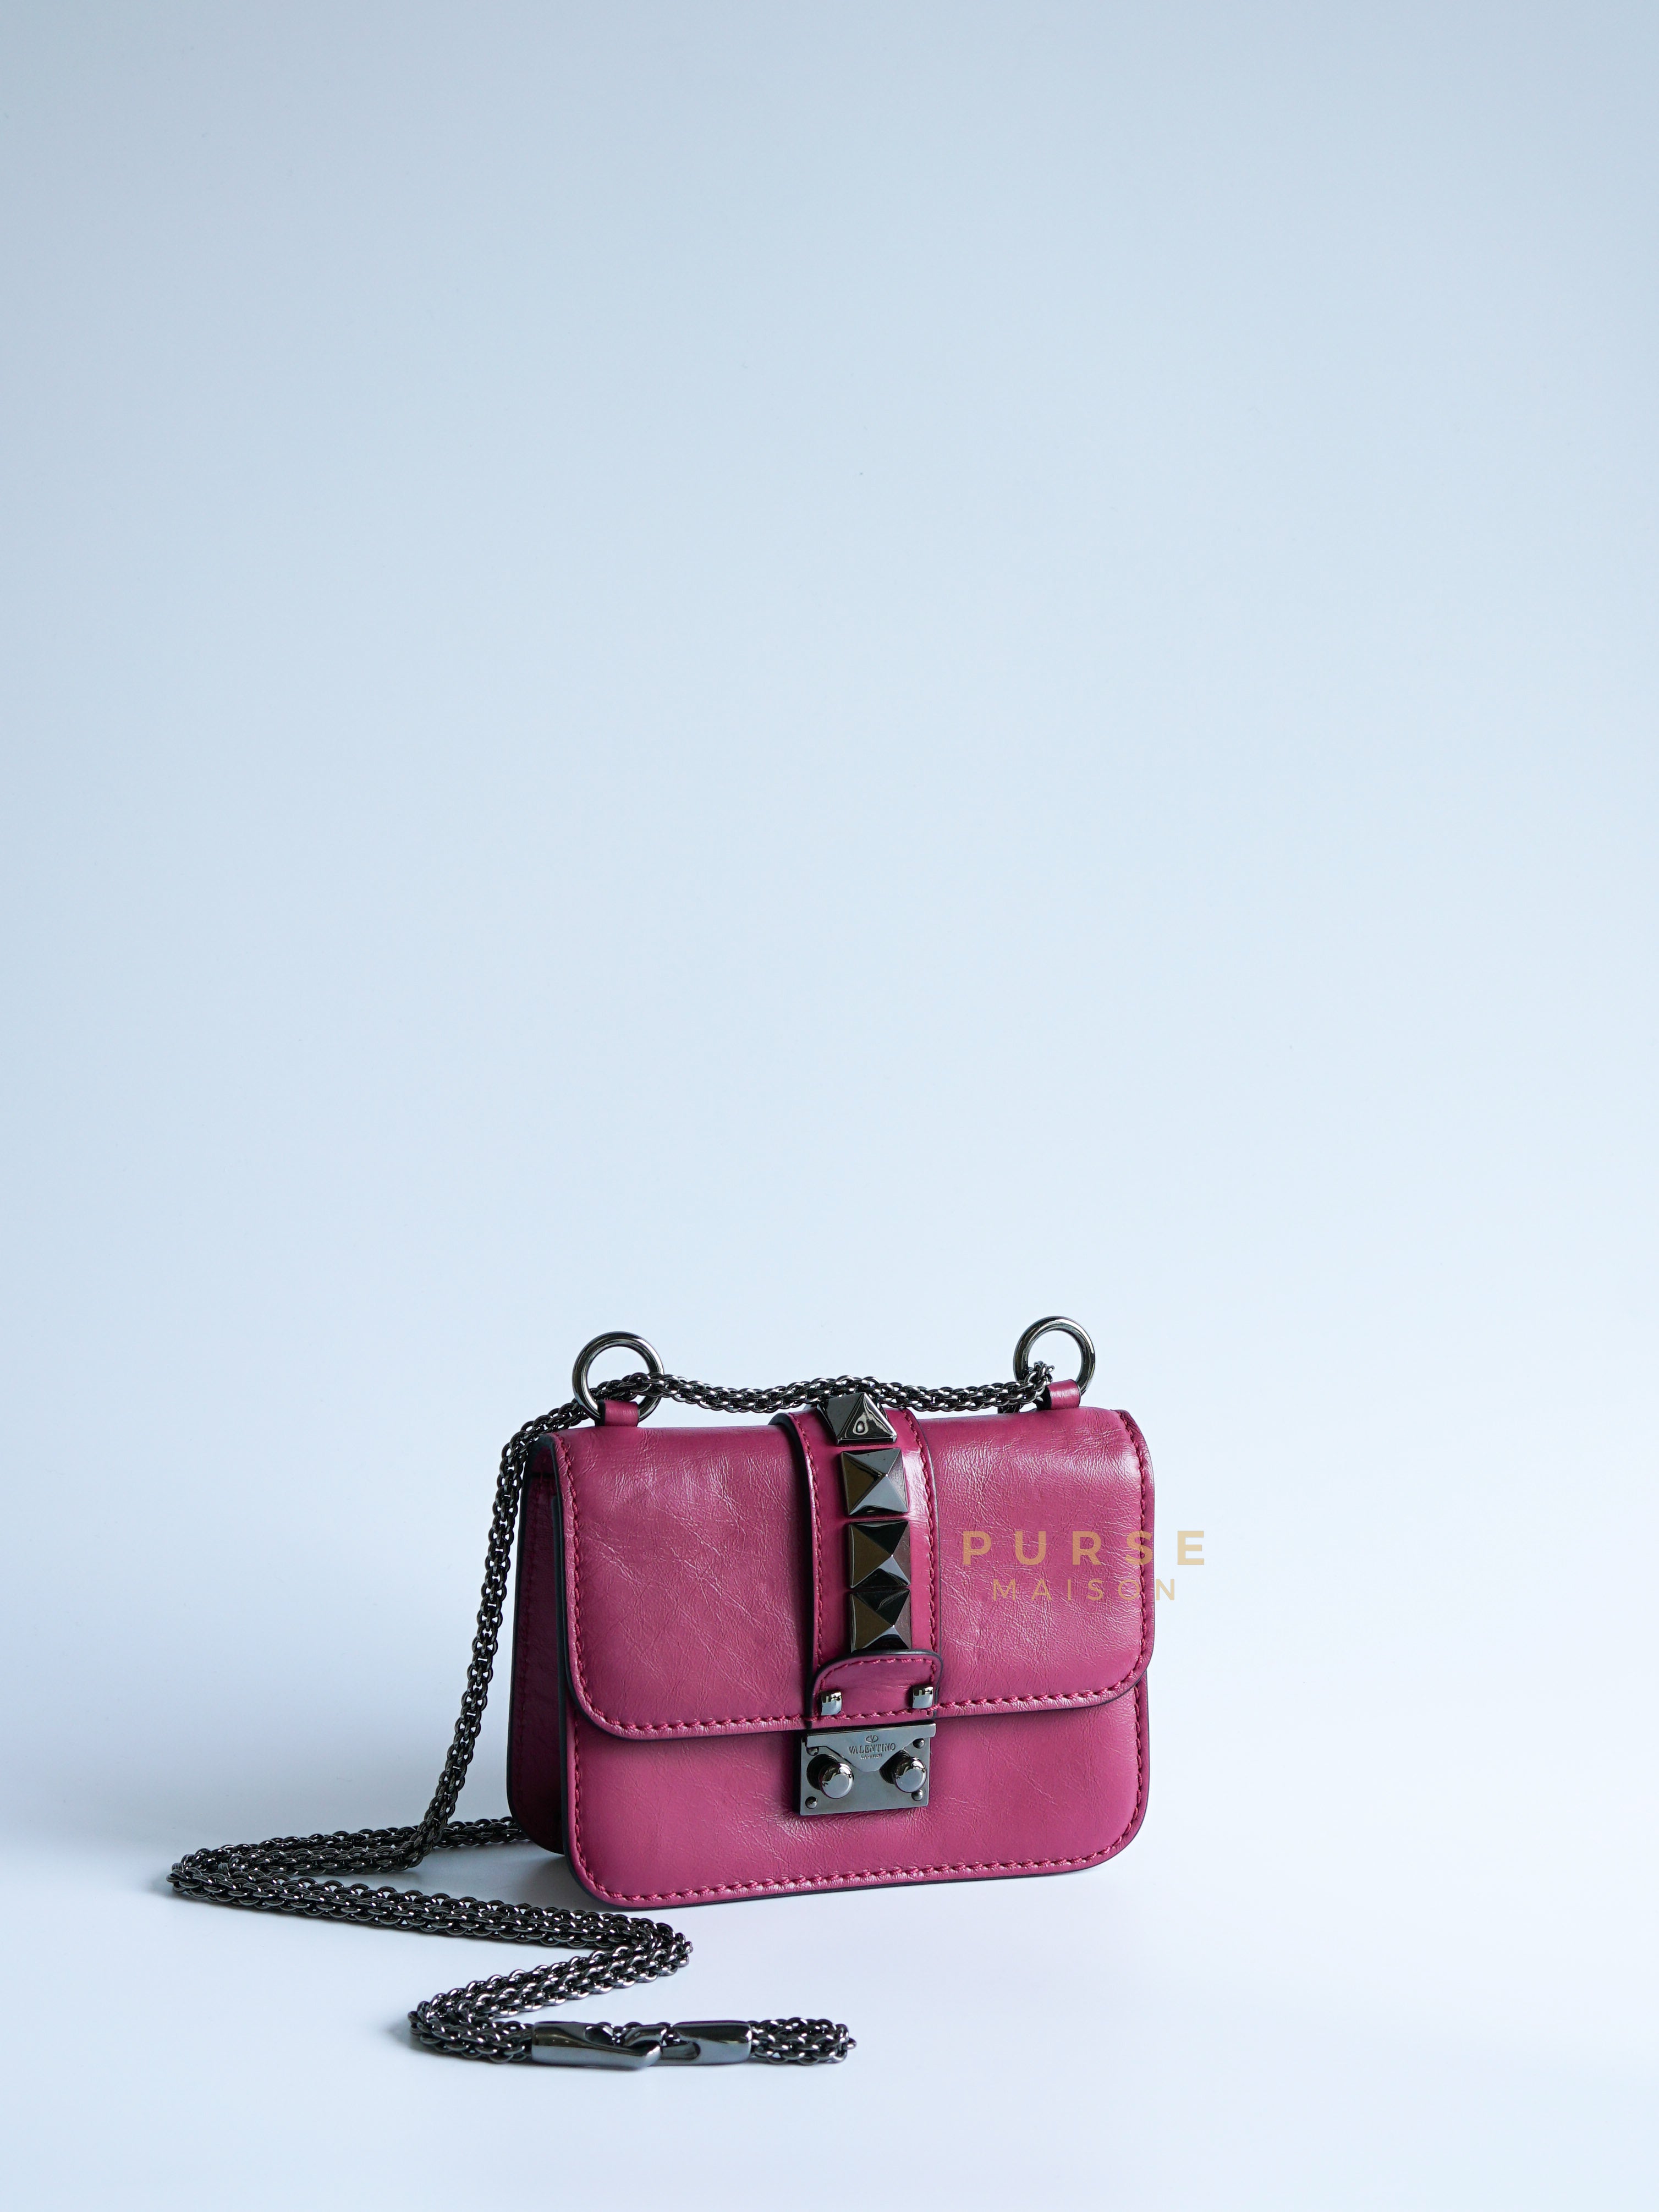 Rockstud Glam Lock Flap in Mini Pink Leather | Purse Maison Luxury Bags Shop